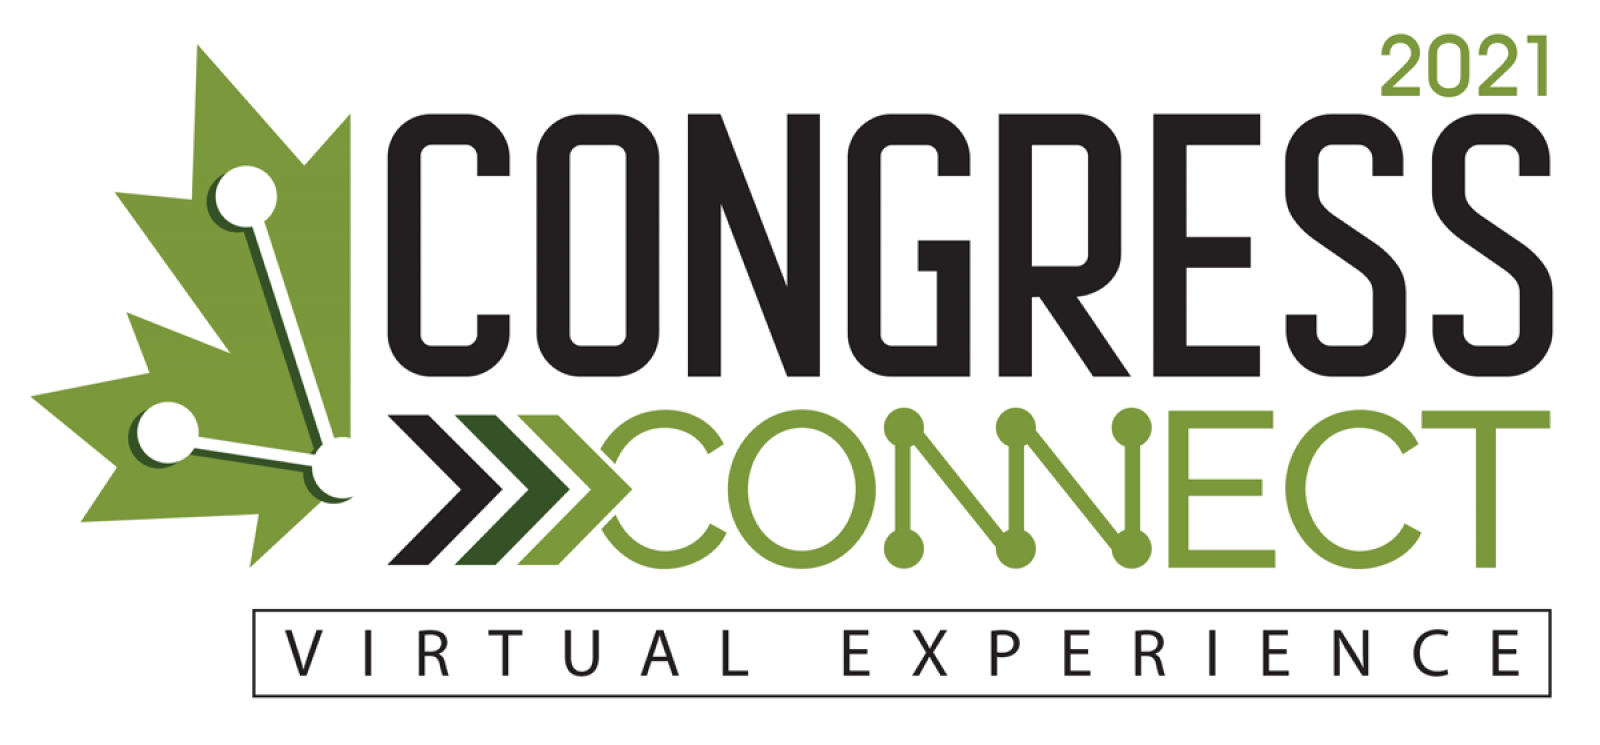 Congress Connect promises a virtual extravaganza